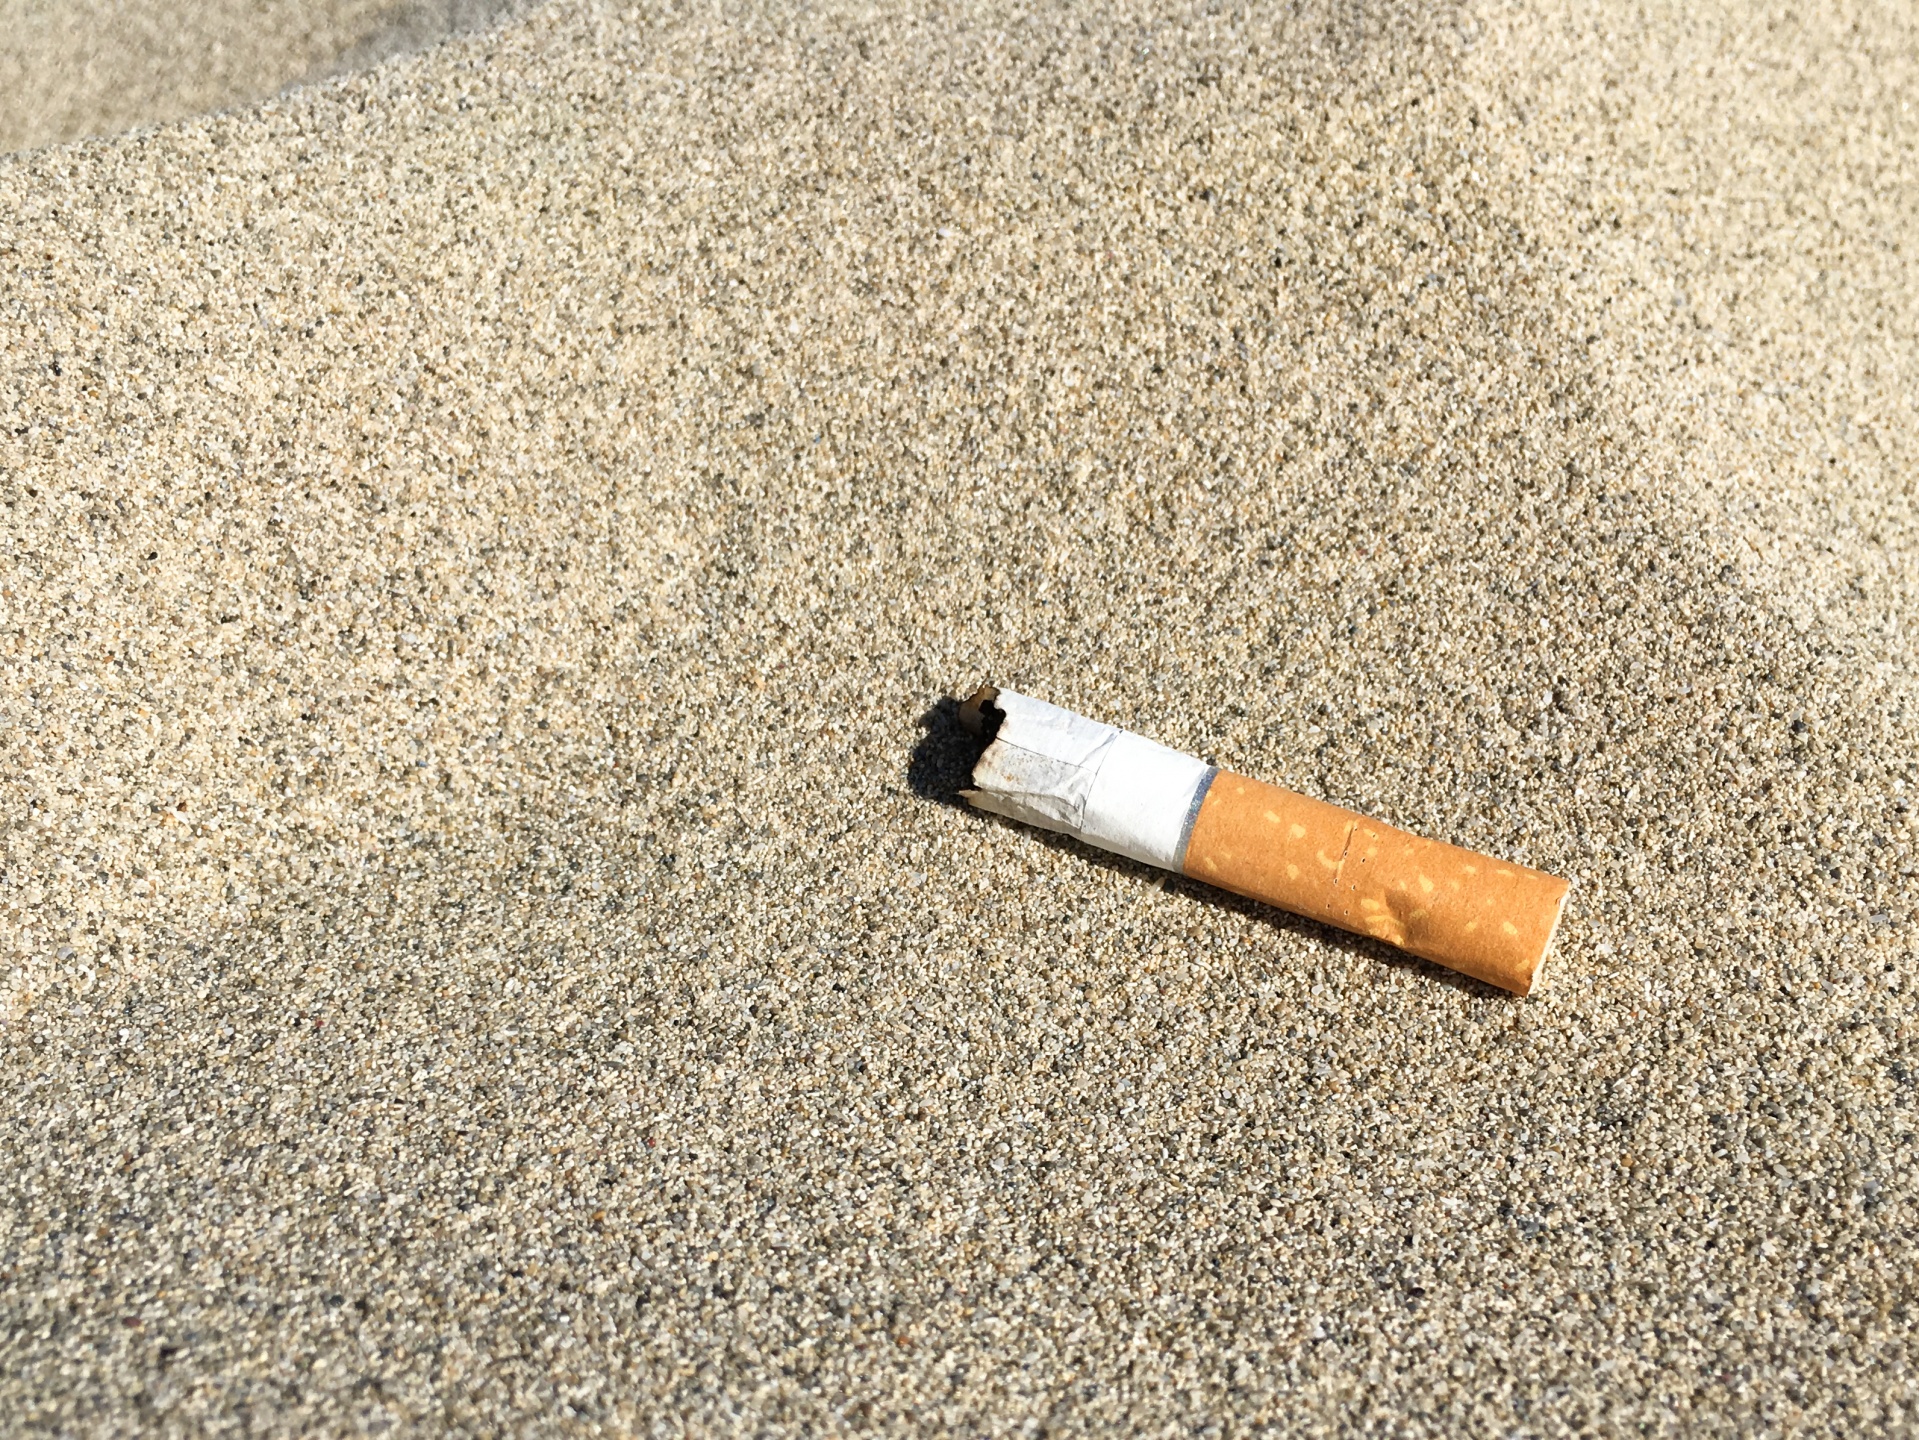 A cigarette butt left on the beach